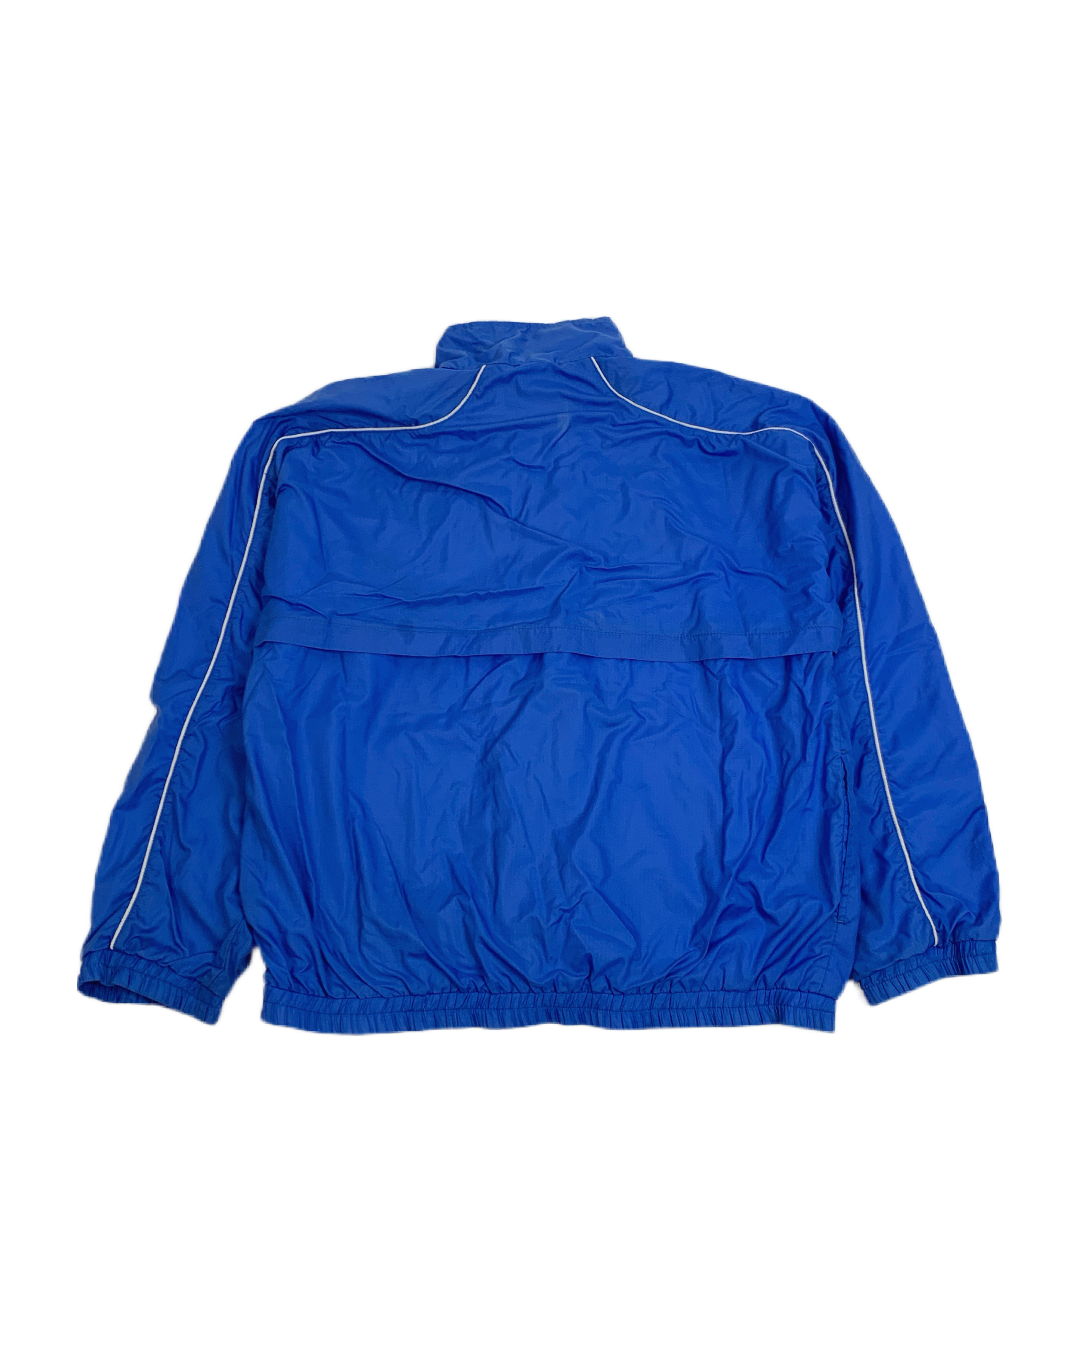 Cruz Azul Sport Training Jacket 2000 Vintage - XL